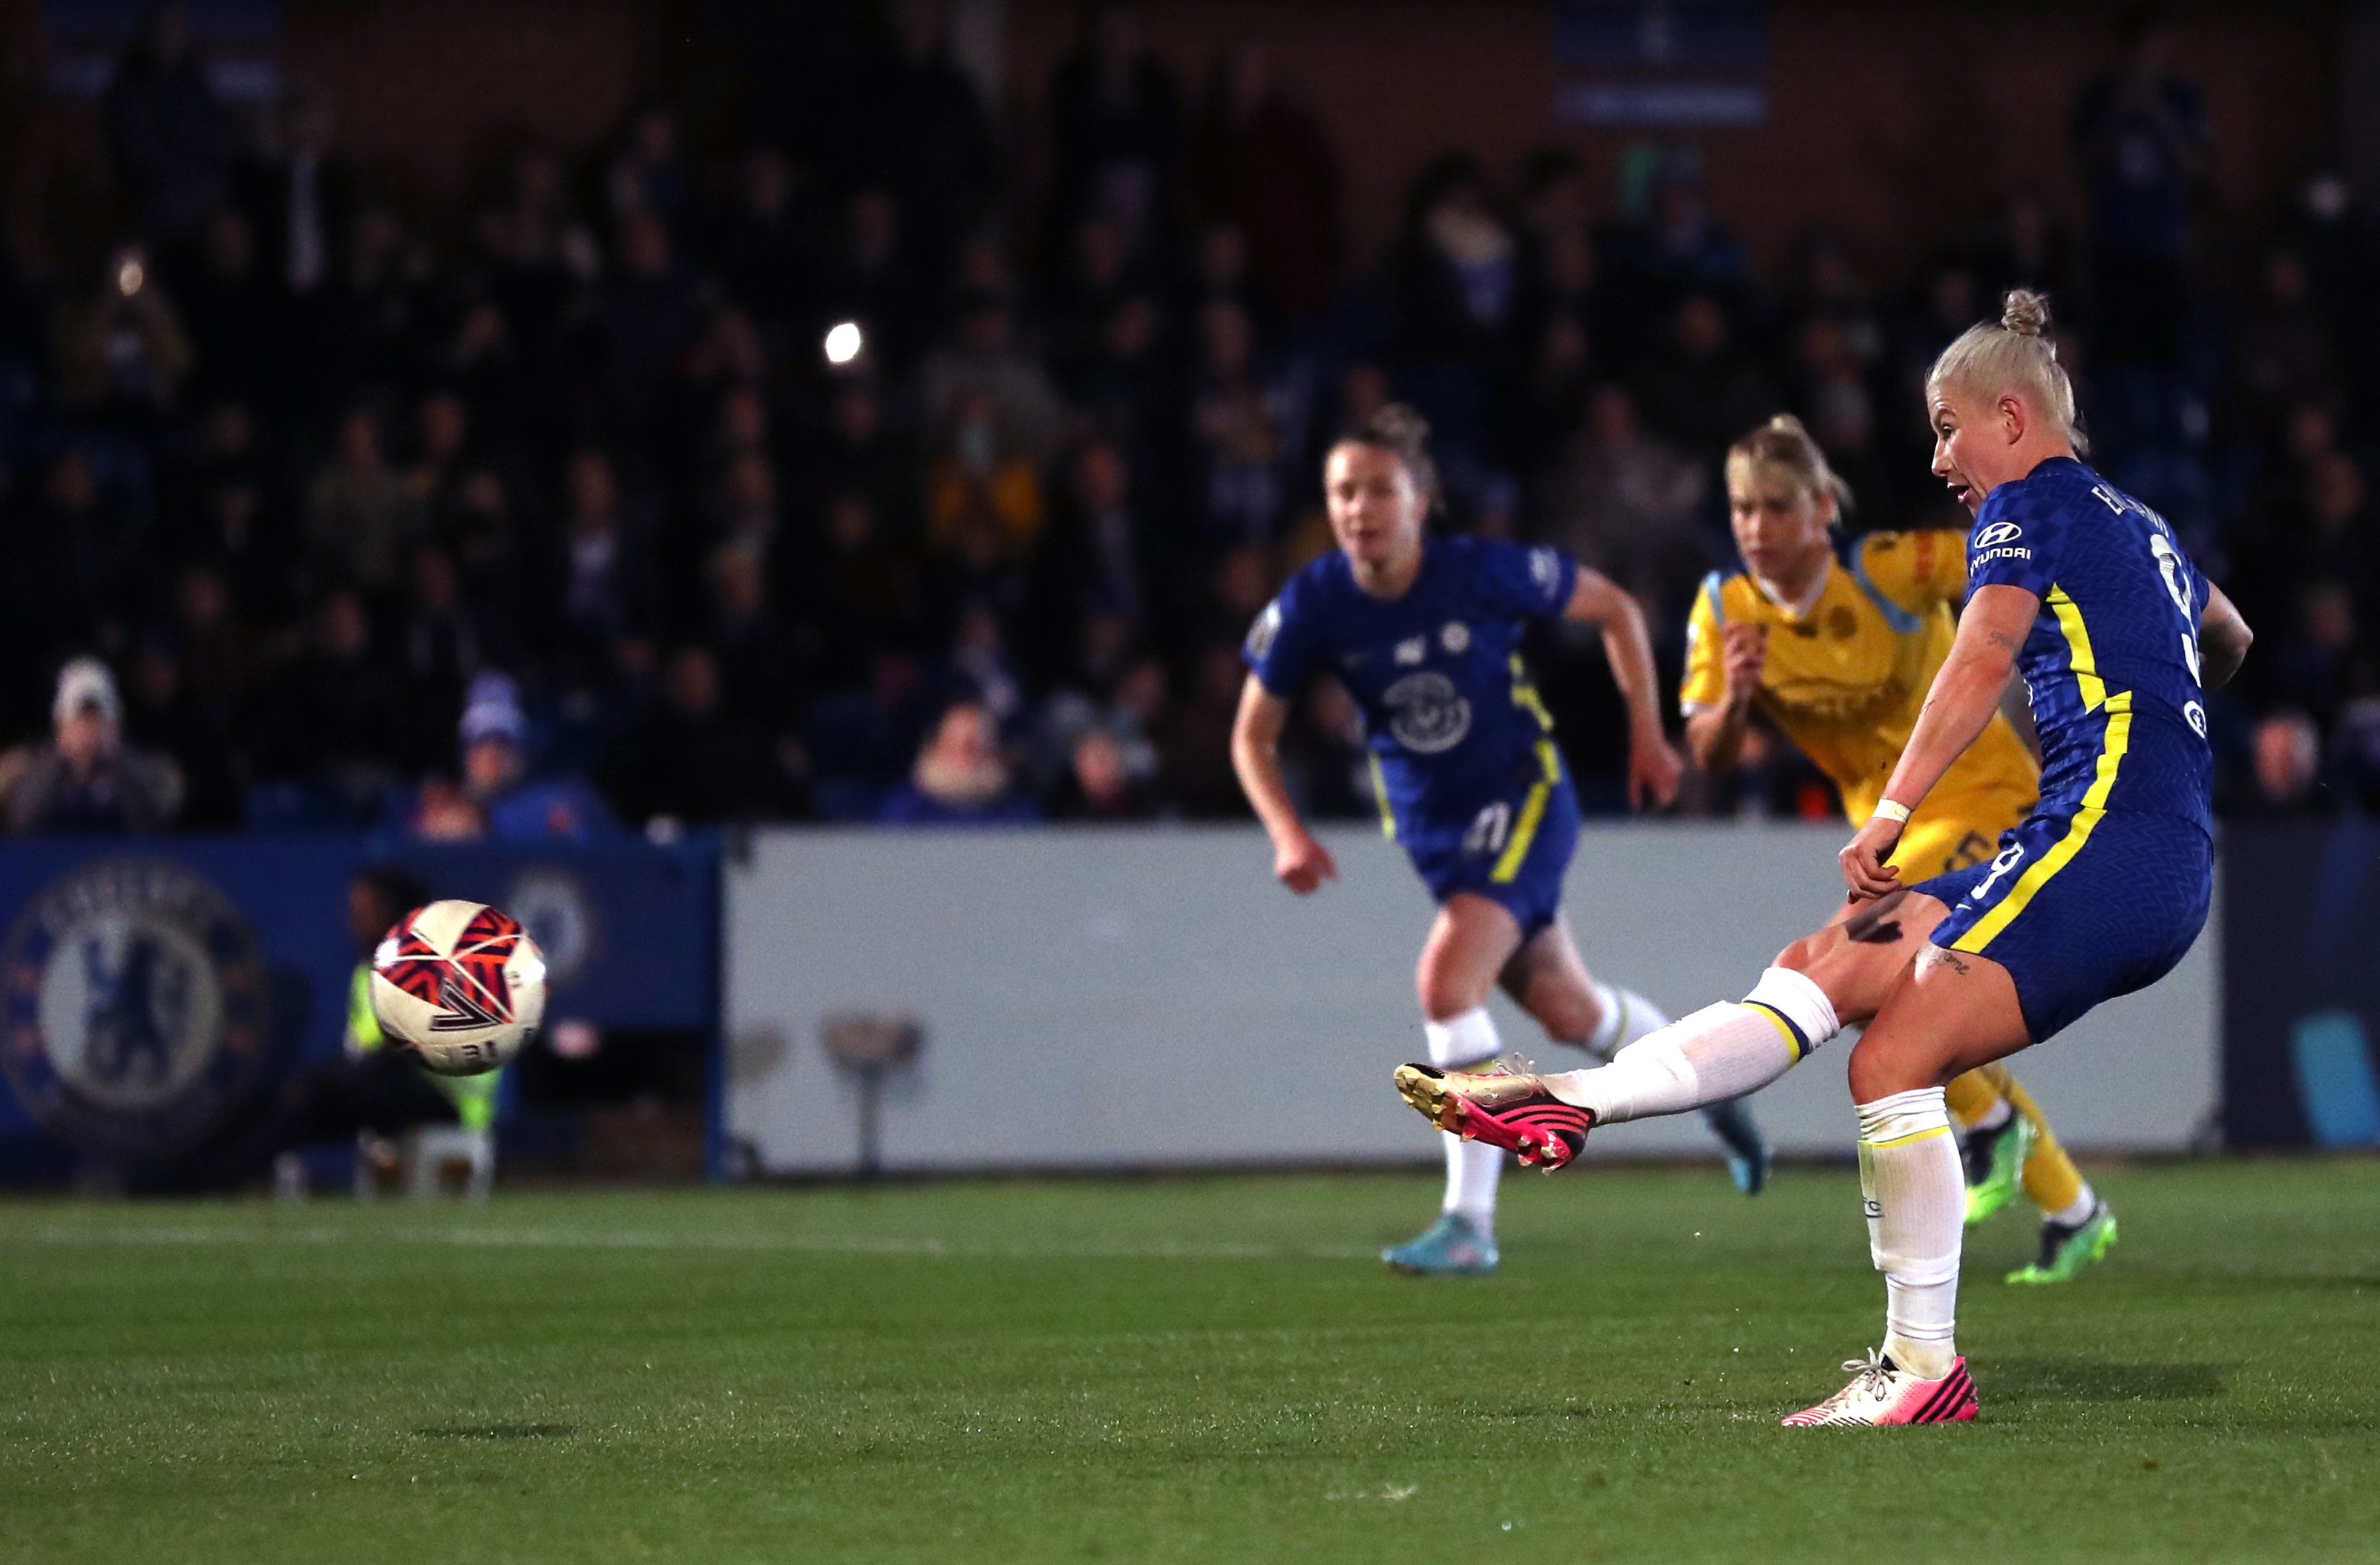 Chelsea v Reading - Barclays FA Women’s Super League - Kingsmeadow